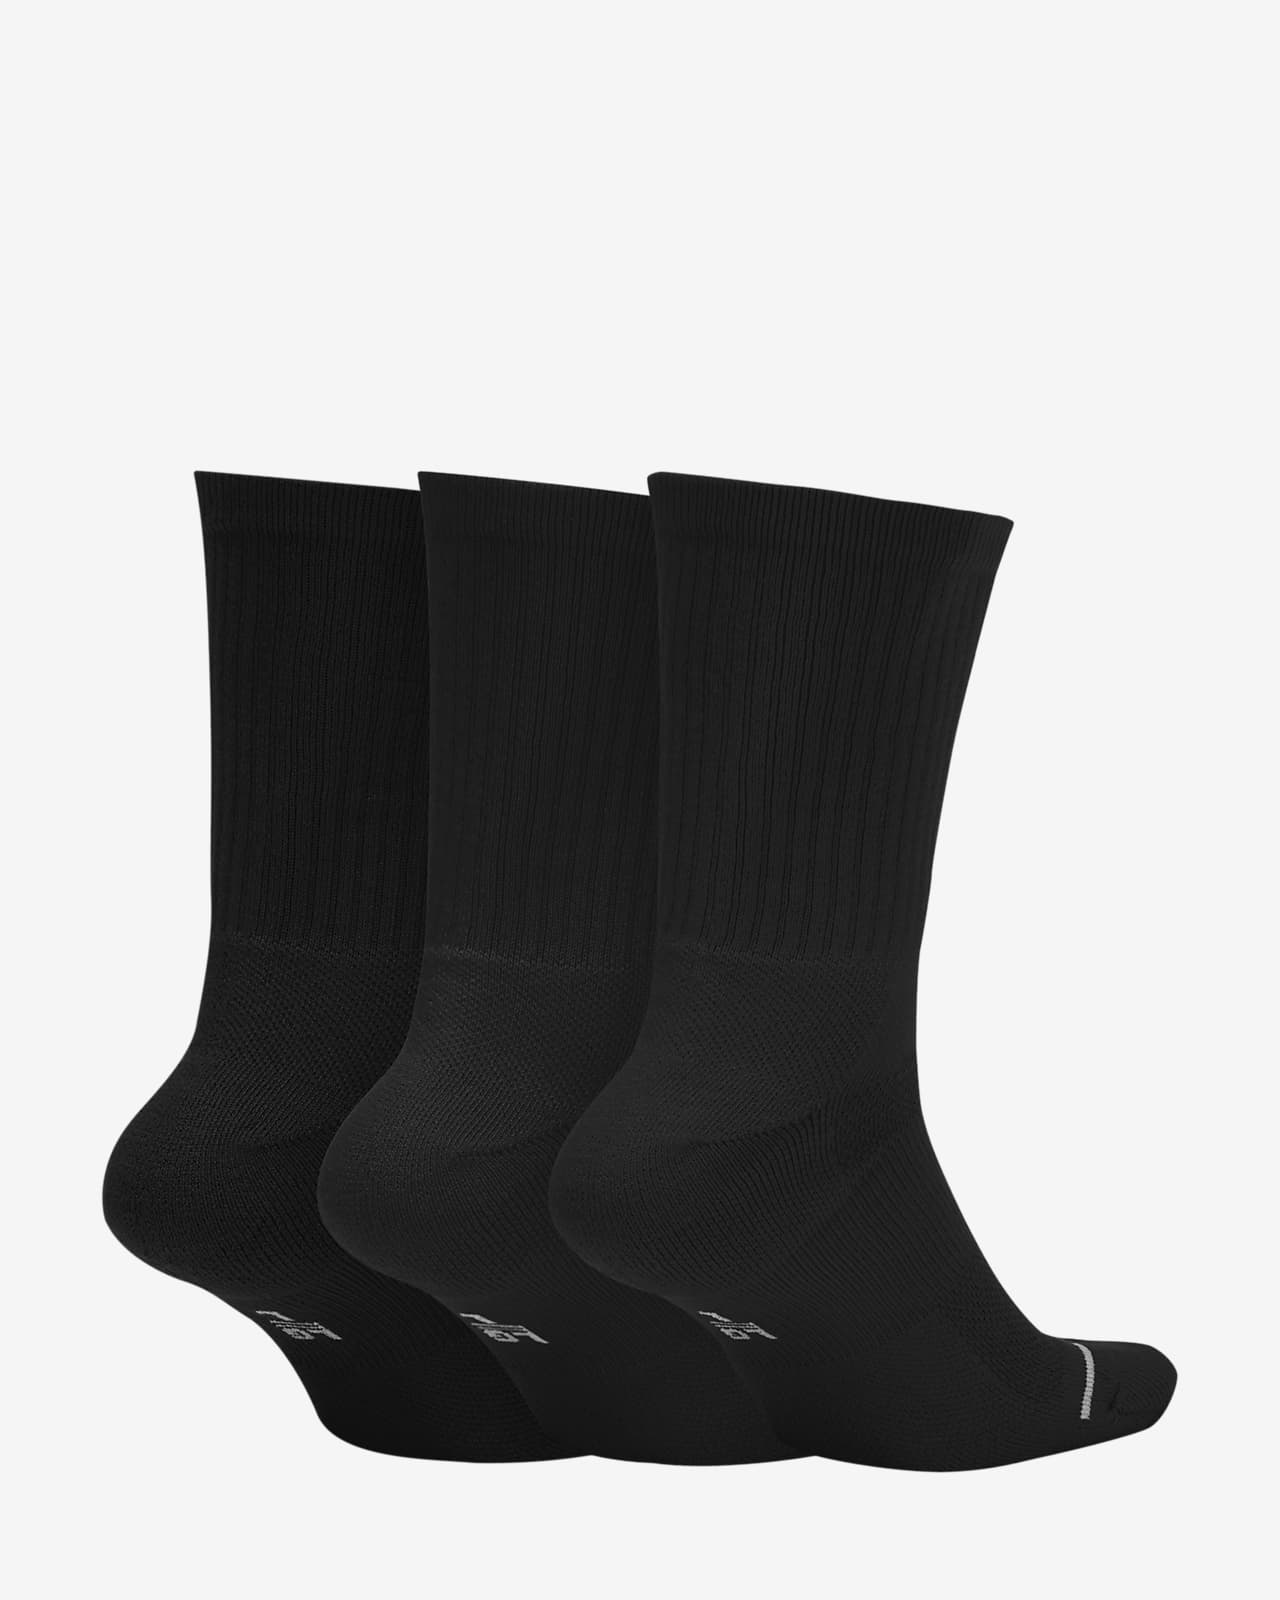 Jordan Everyday Max Unisex Crew Socks (3 Pack). Nike LU